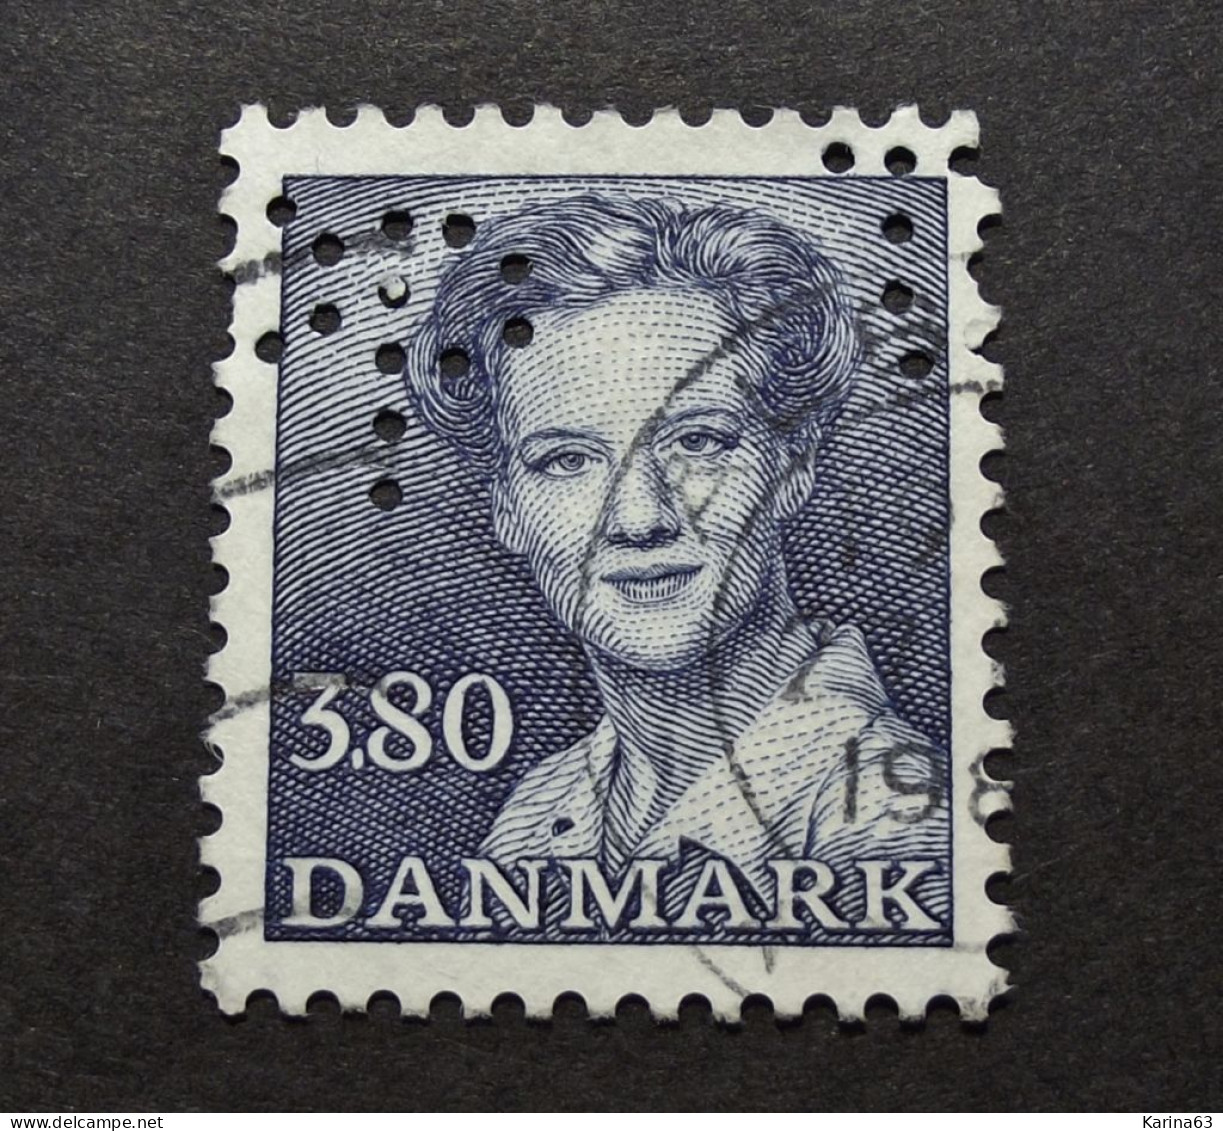 Denmark  - Danemark - 1975 - Queen Margrethe Perfin -  Topsikring Insurance Company From Copenhagen   - Cancelled - Gebruikt